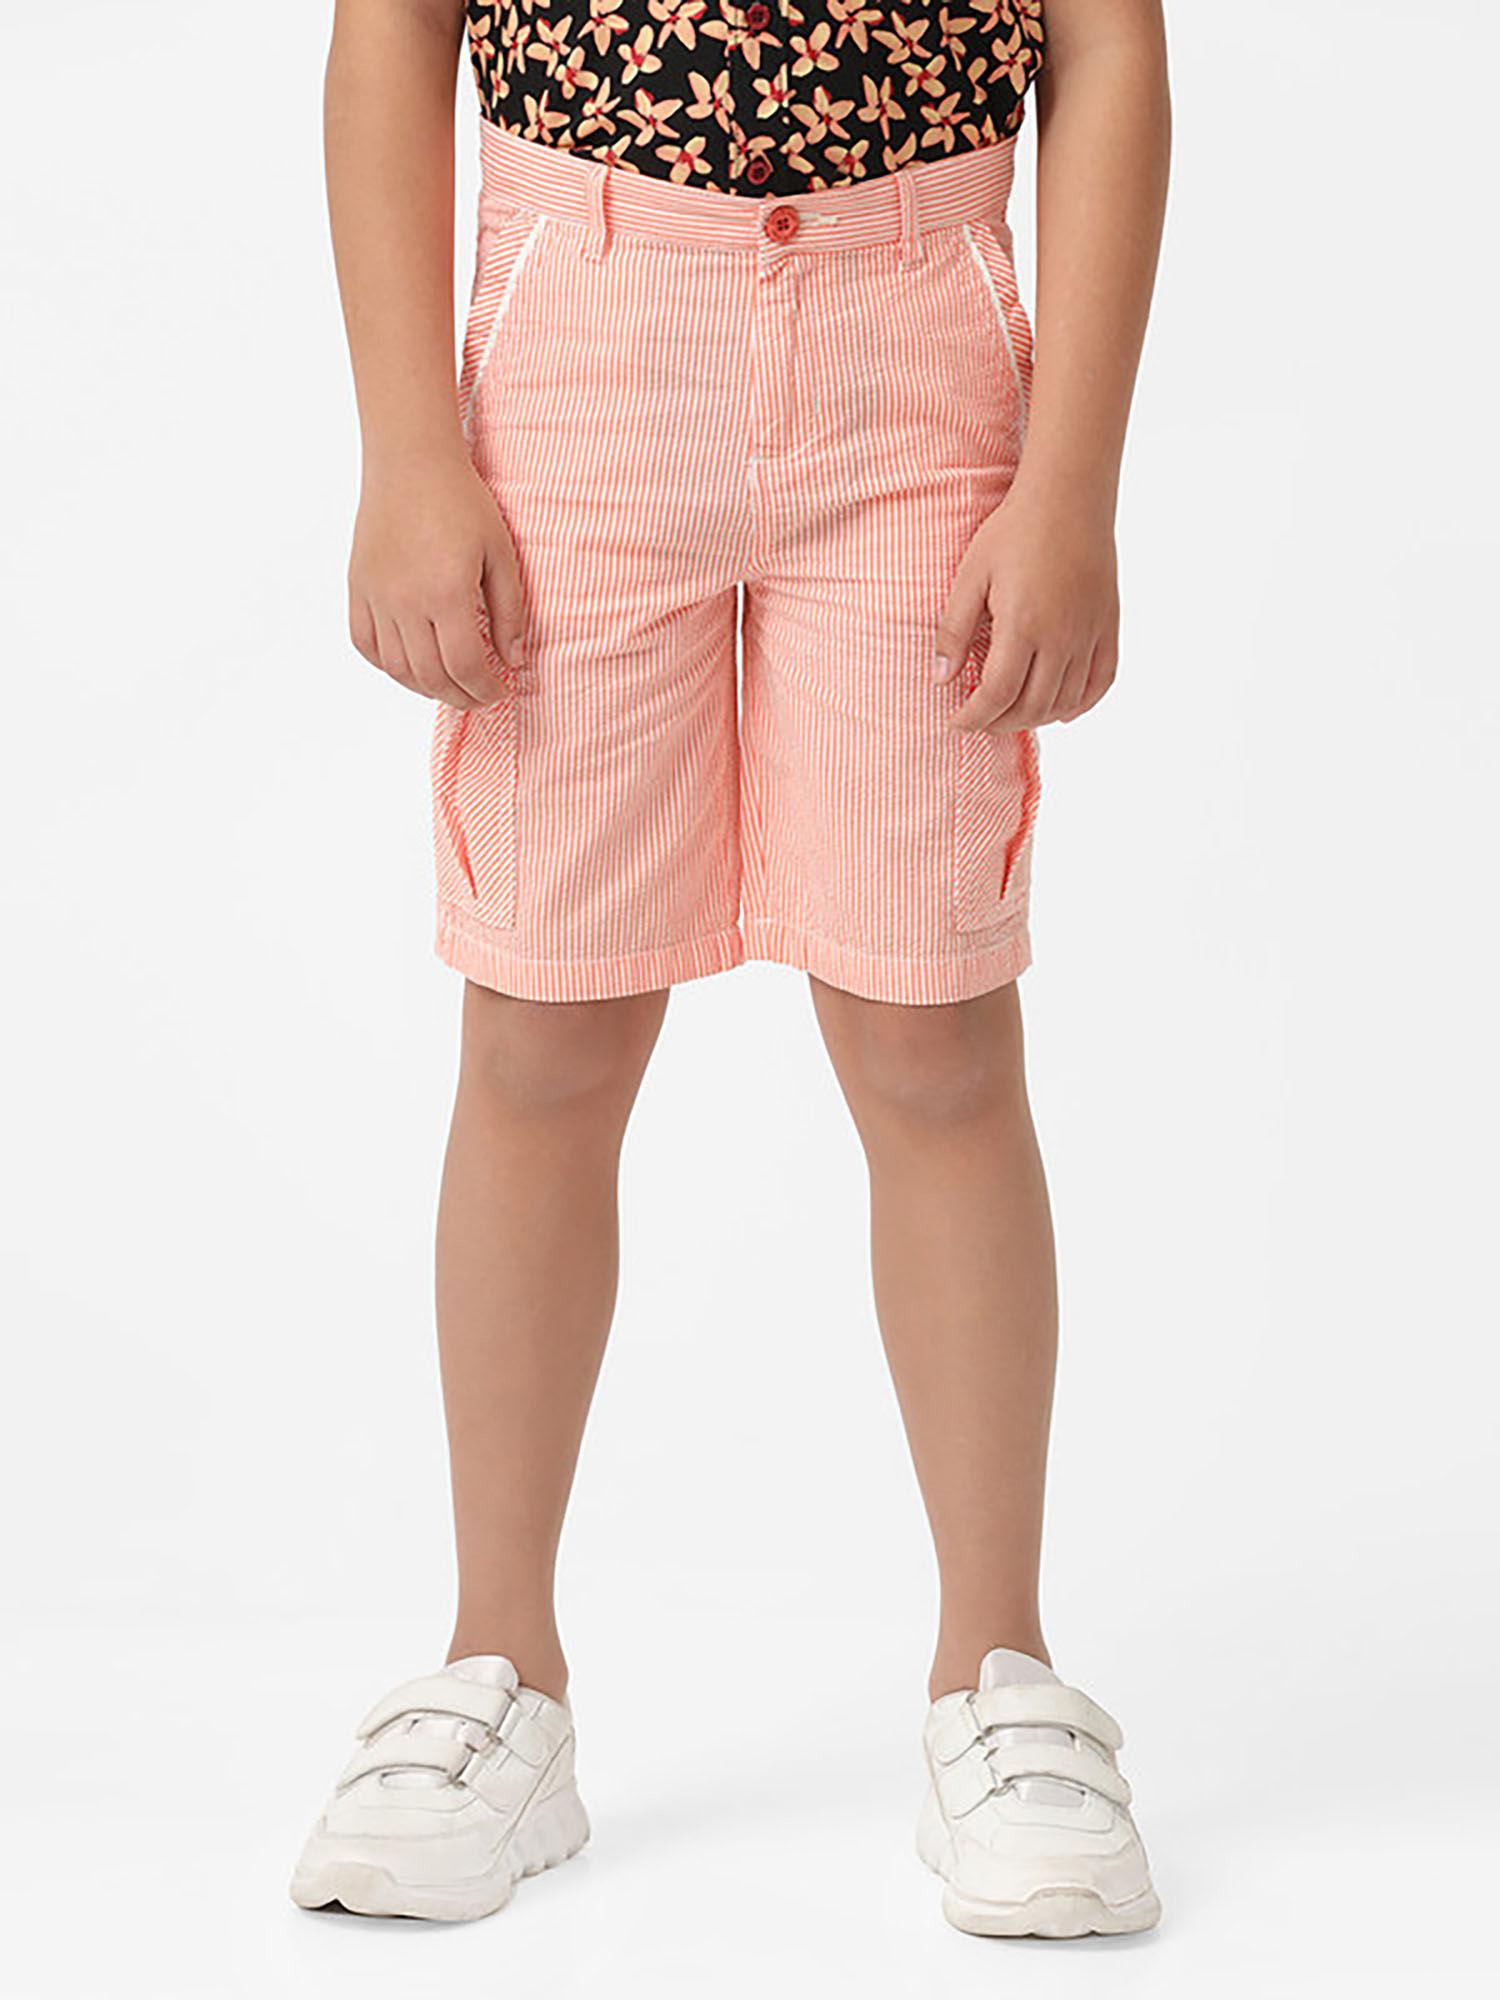 coral stripes boys shorts